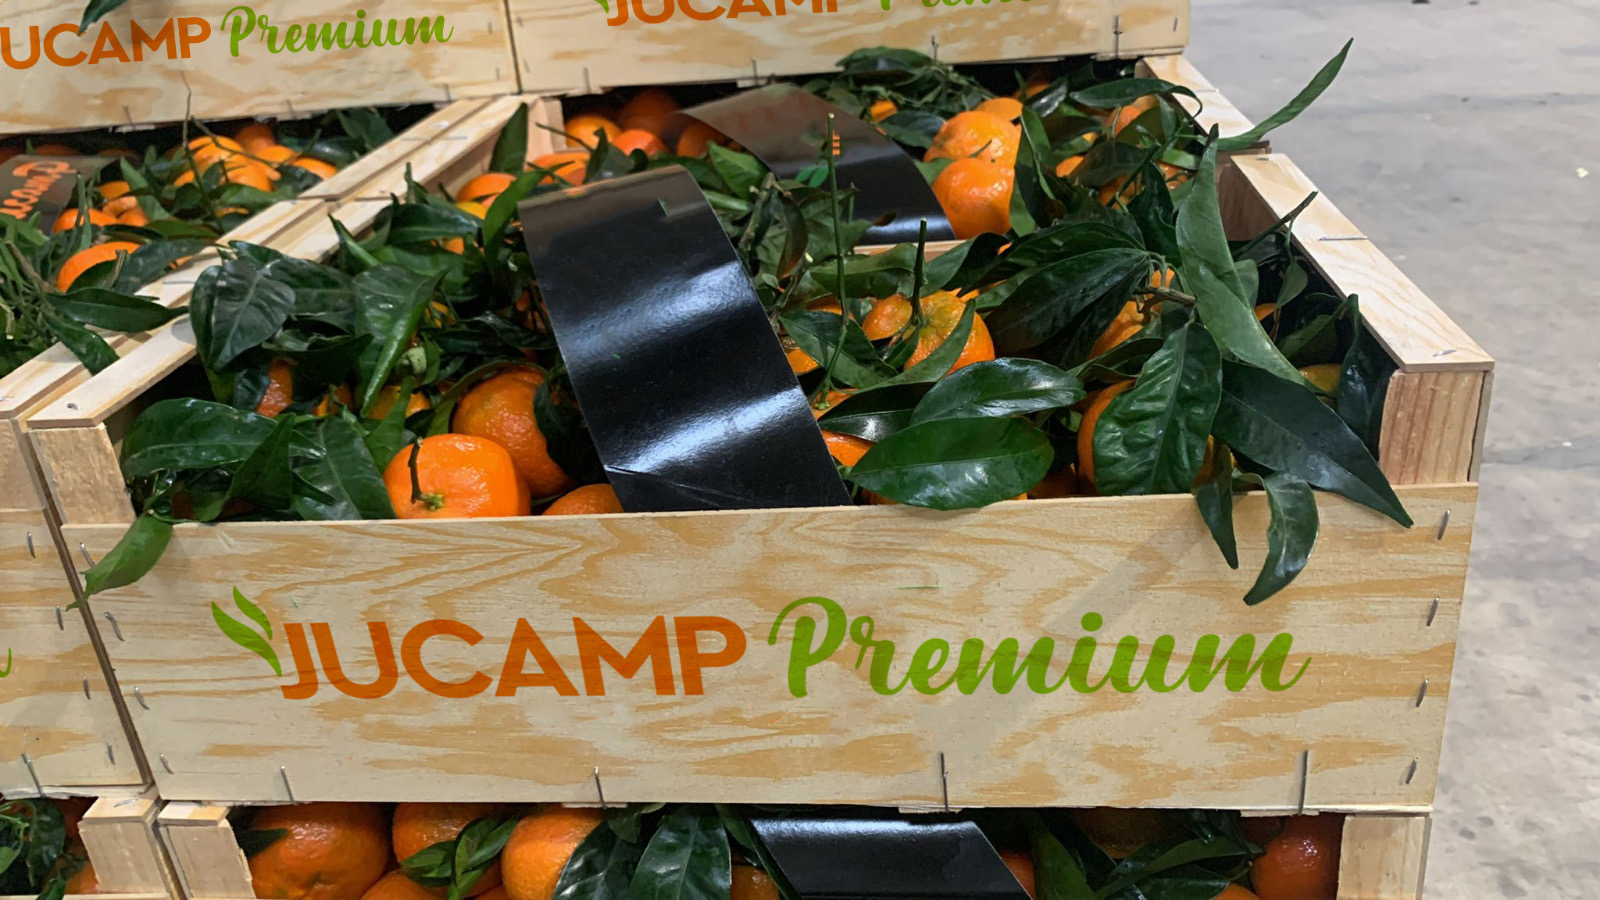 Jucamp Premium